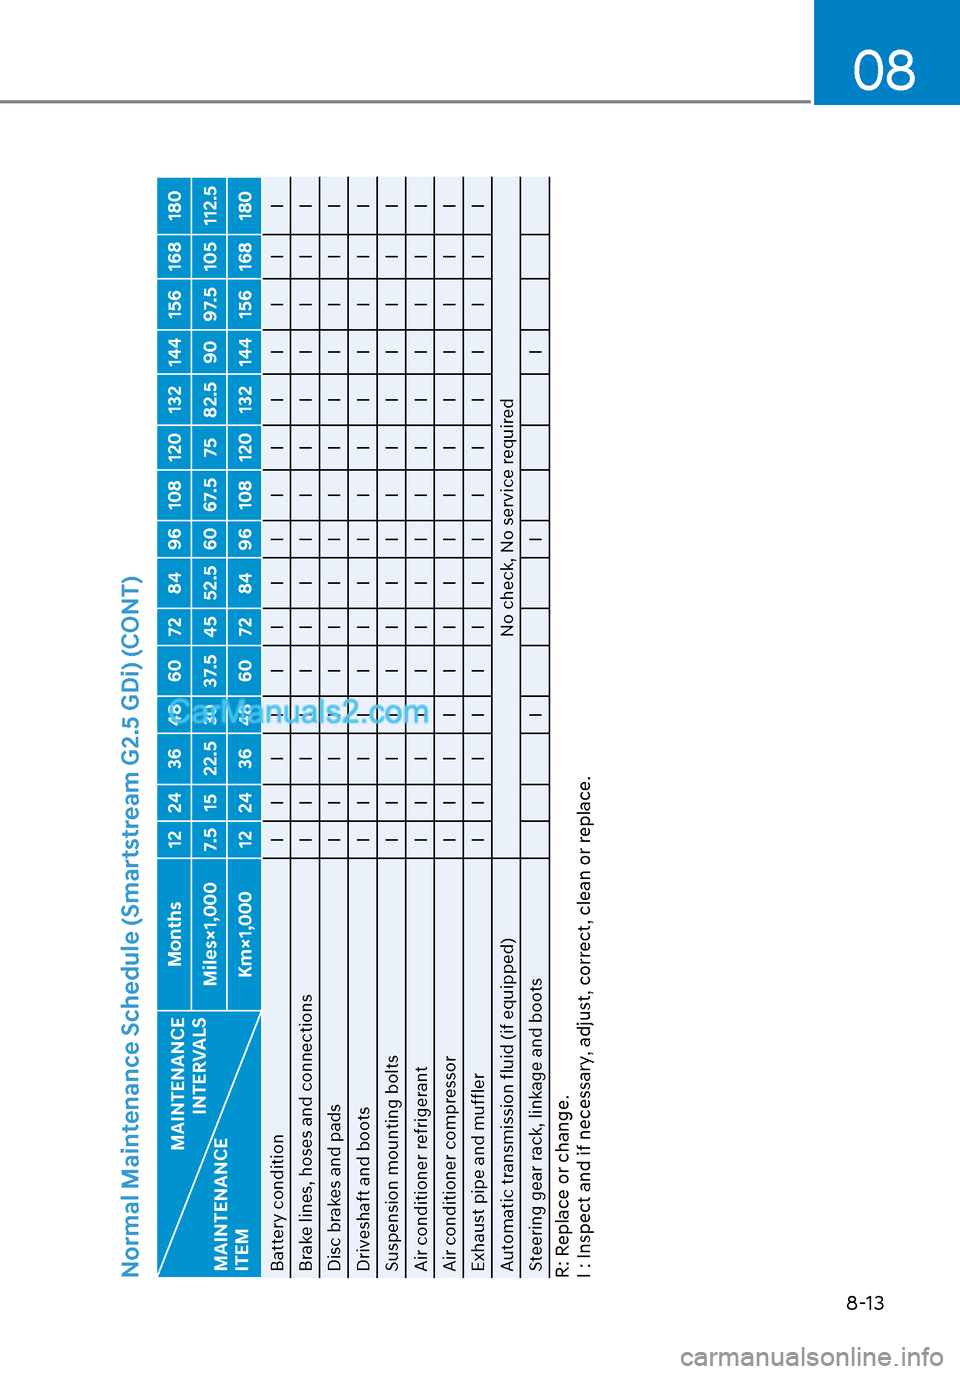 Hyundai Sonata 2020 Workshop Manual 08
8-13
Normal Maintenance Schedule (Smartstream G2.5 GDi) (CONT)
MAINTENANCE INTERVALS
MAINTENANCE 
ITEM Months 12 24 36 48 60 72 84 96 108 120 132 144 156 168 180
Miles×1,000 7.5 15 22.5 30 37.5 45